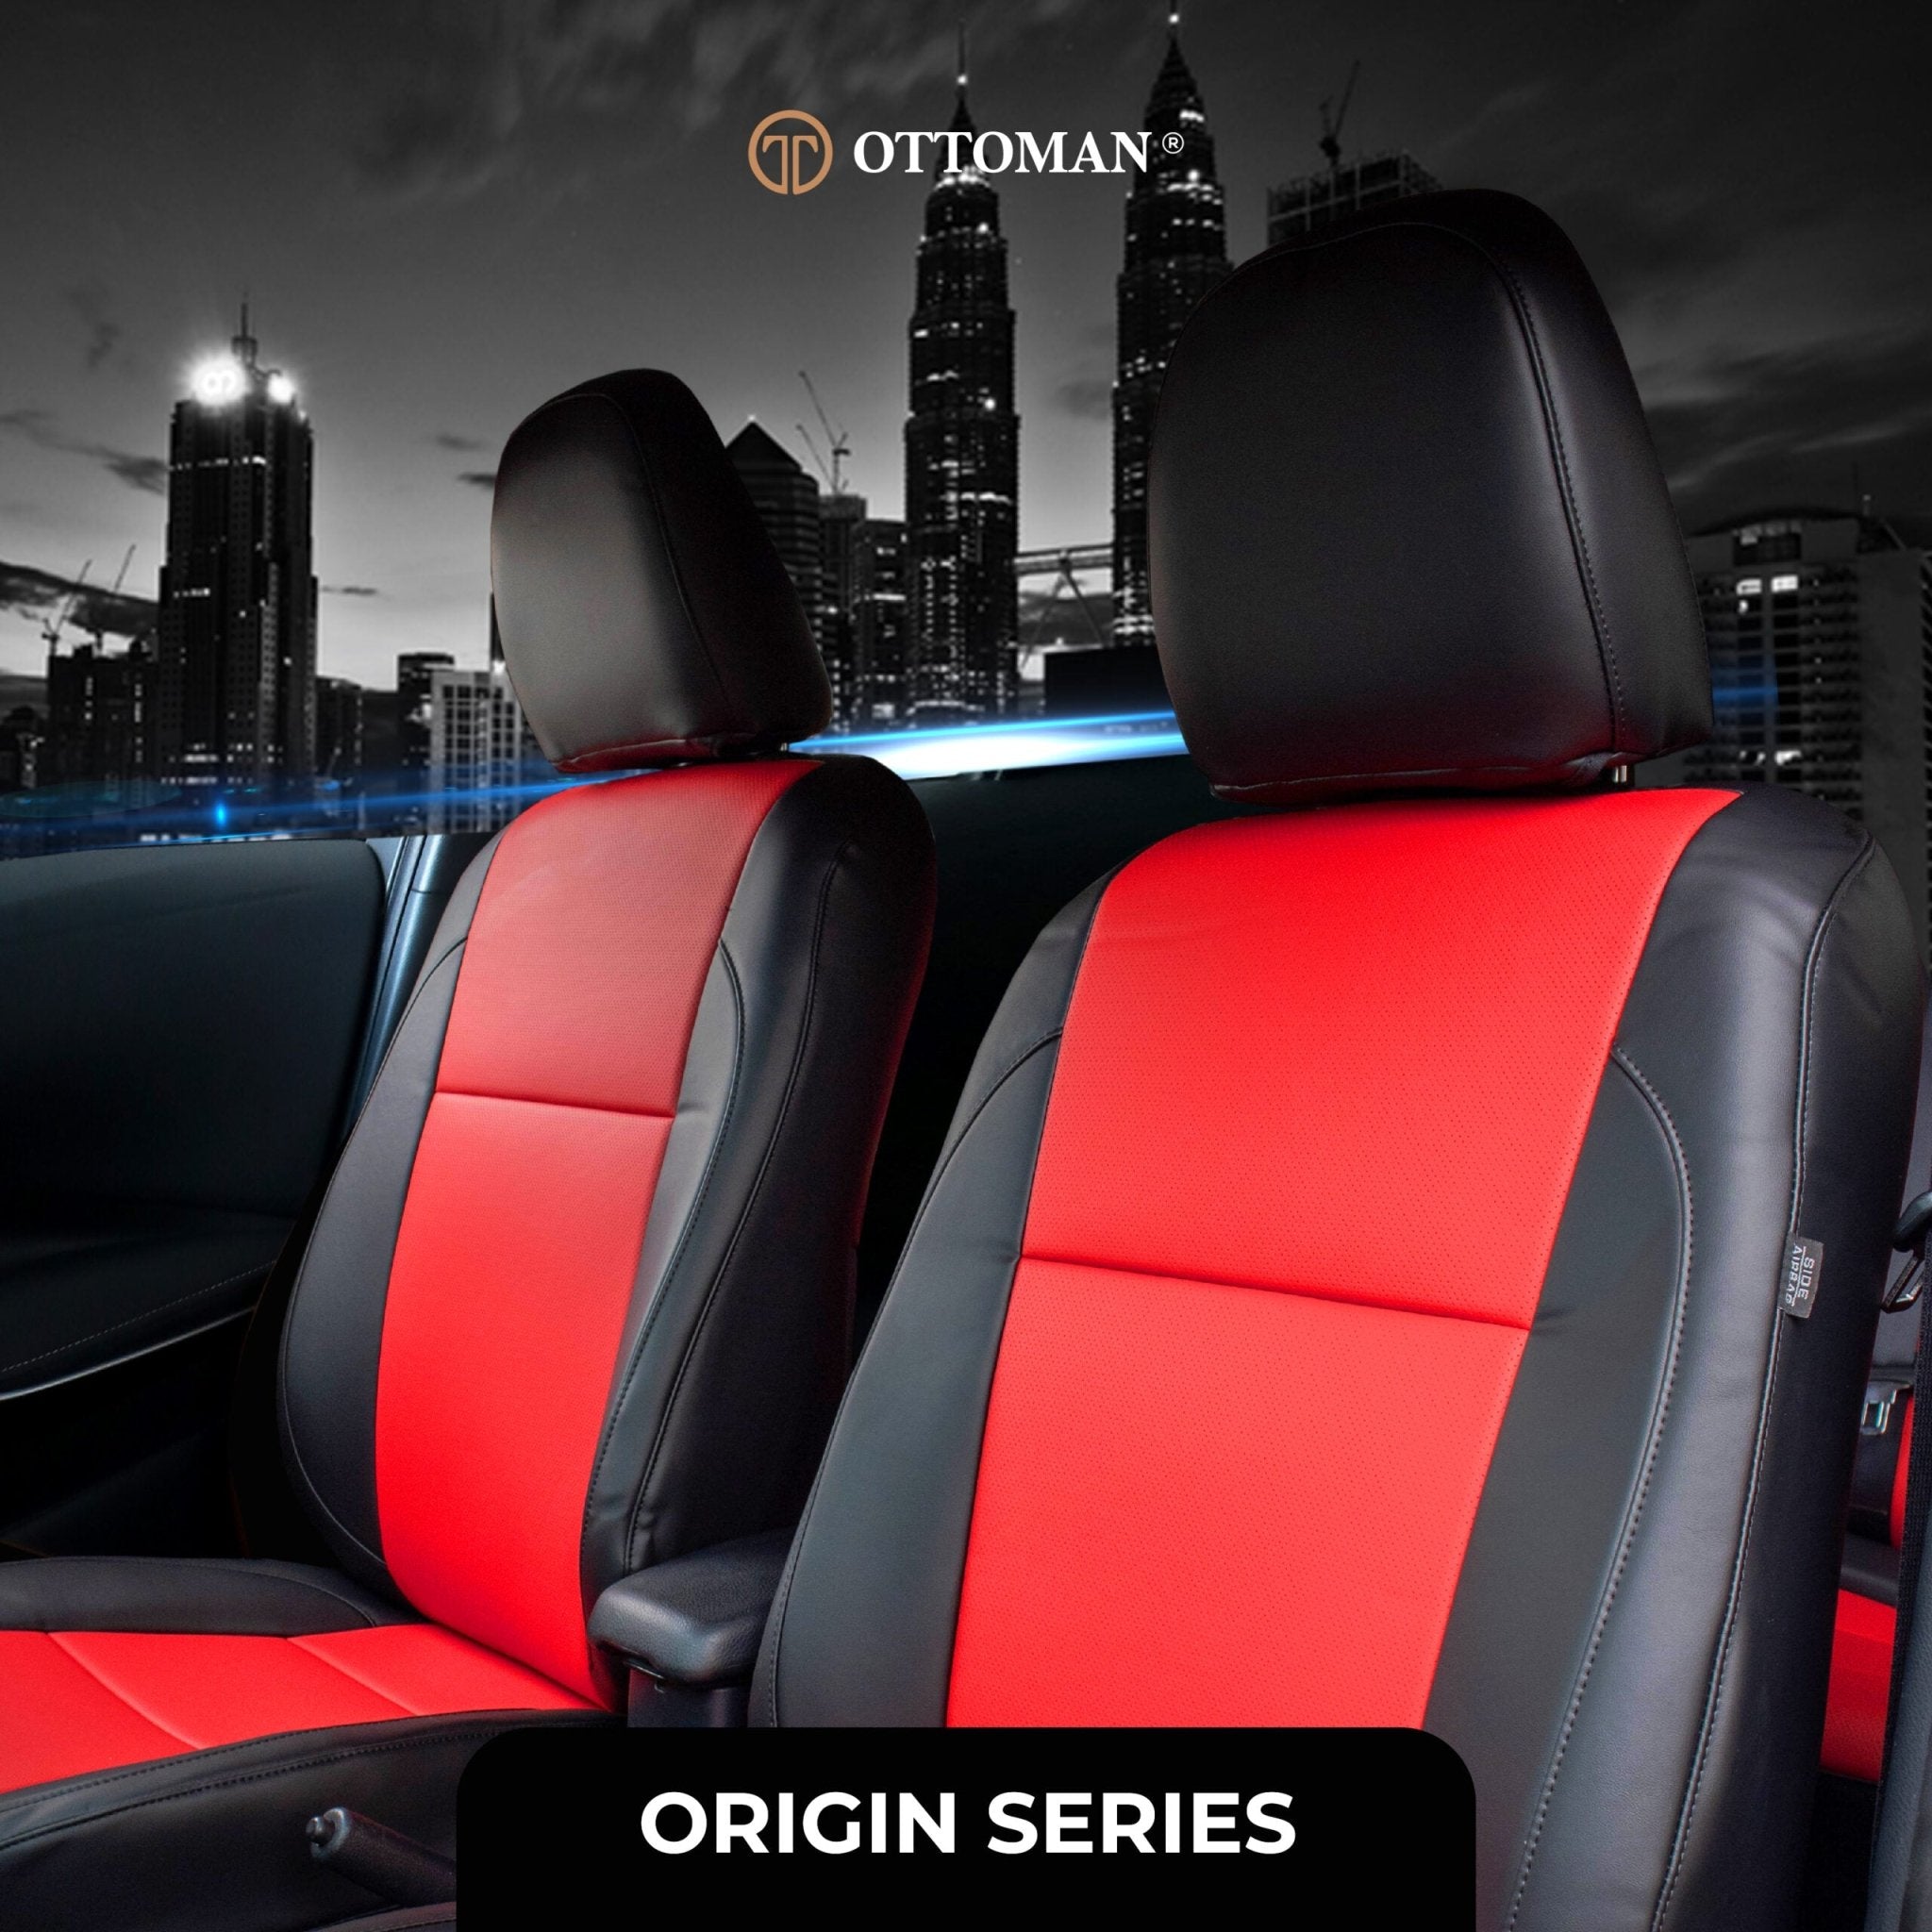 Proton Suprima S (2013-Present) Ottoman Seat Cover Seat Cover in Klang Selangor, Penang, Johor Bahru - Ottoman Car Mats